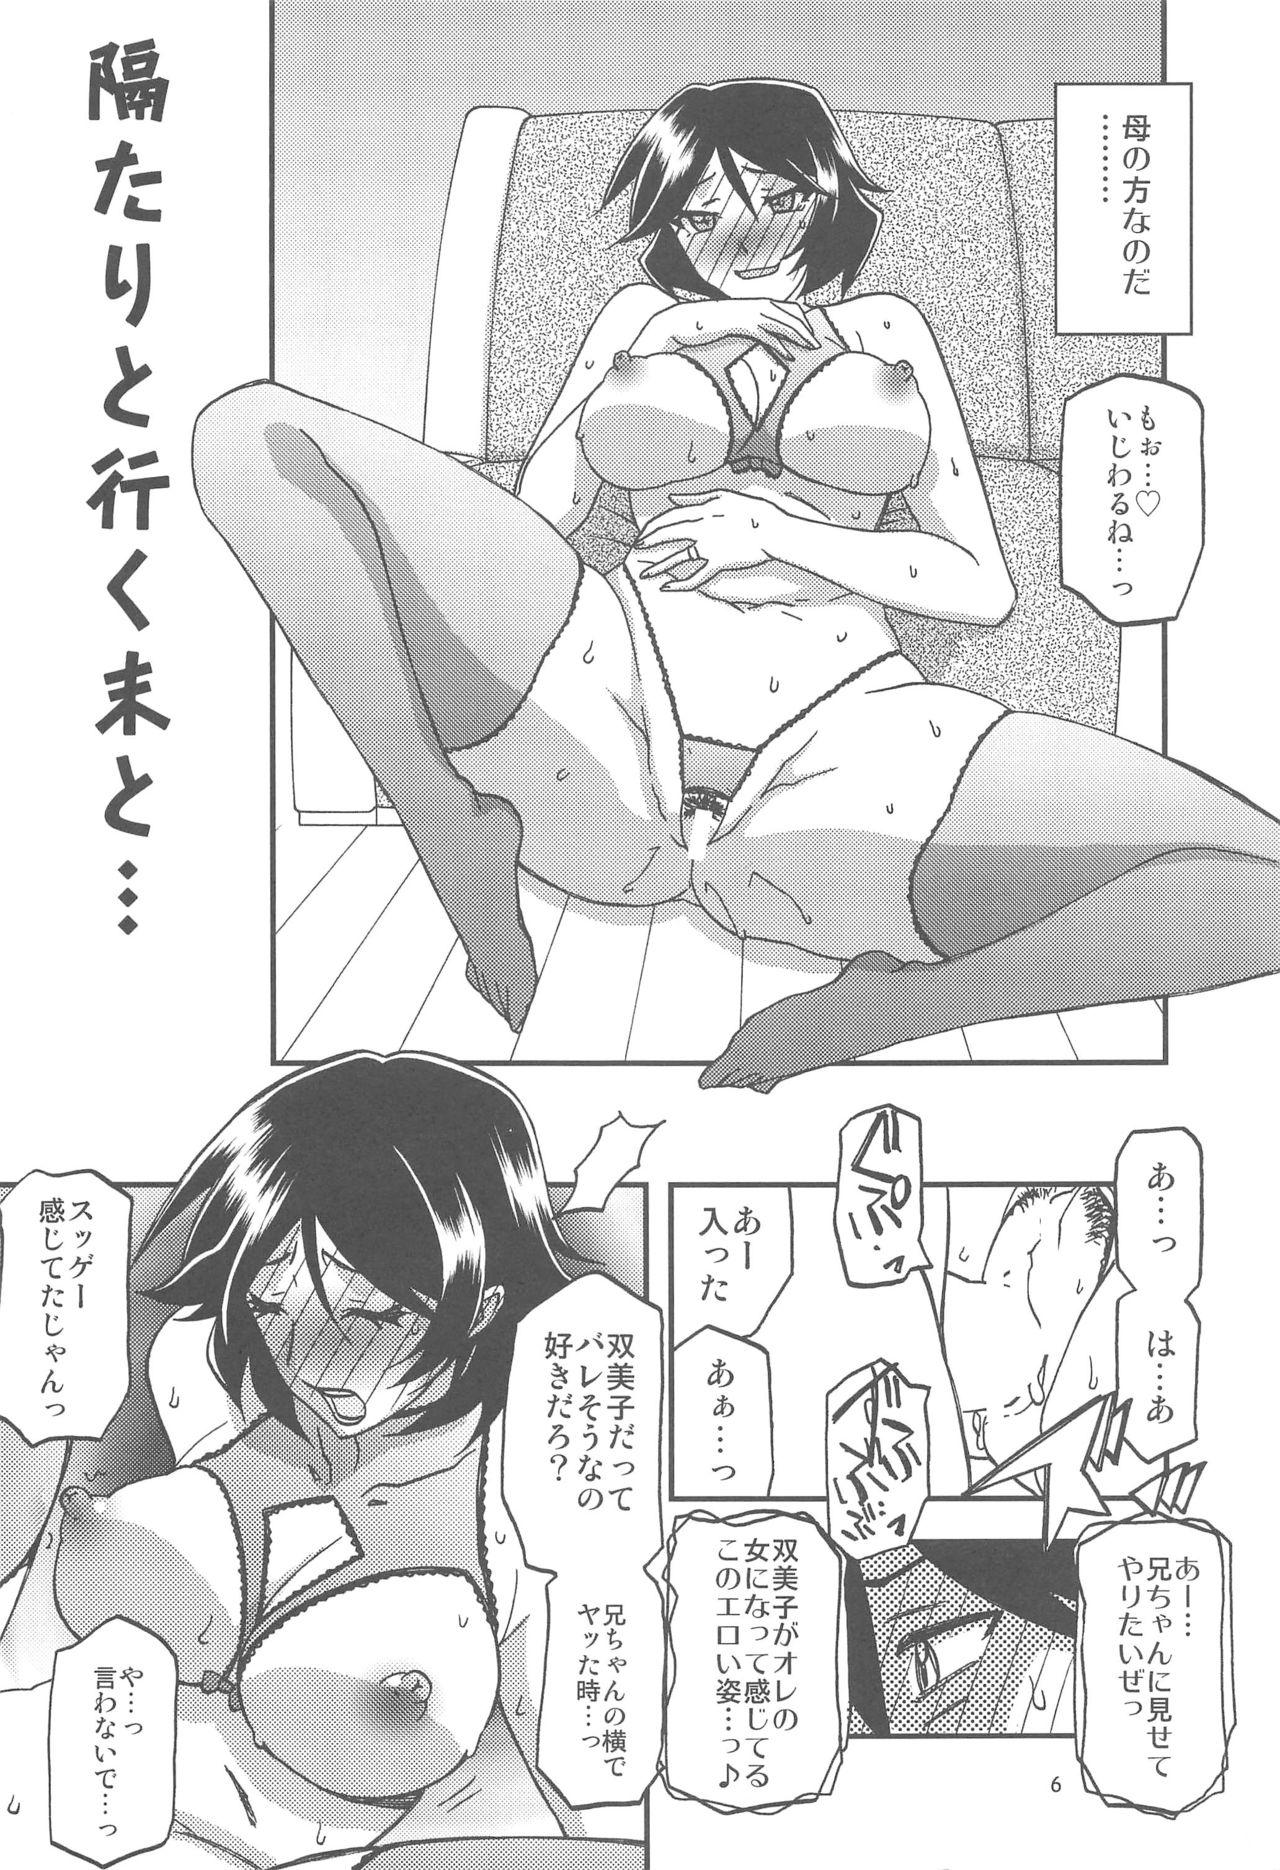 Lovers Akebi no Mi - Fumiko AFTER - Akebi no mi Tranny Sex - Page 6